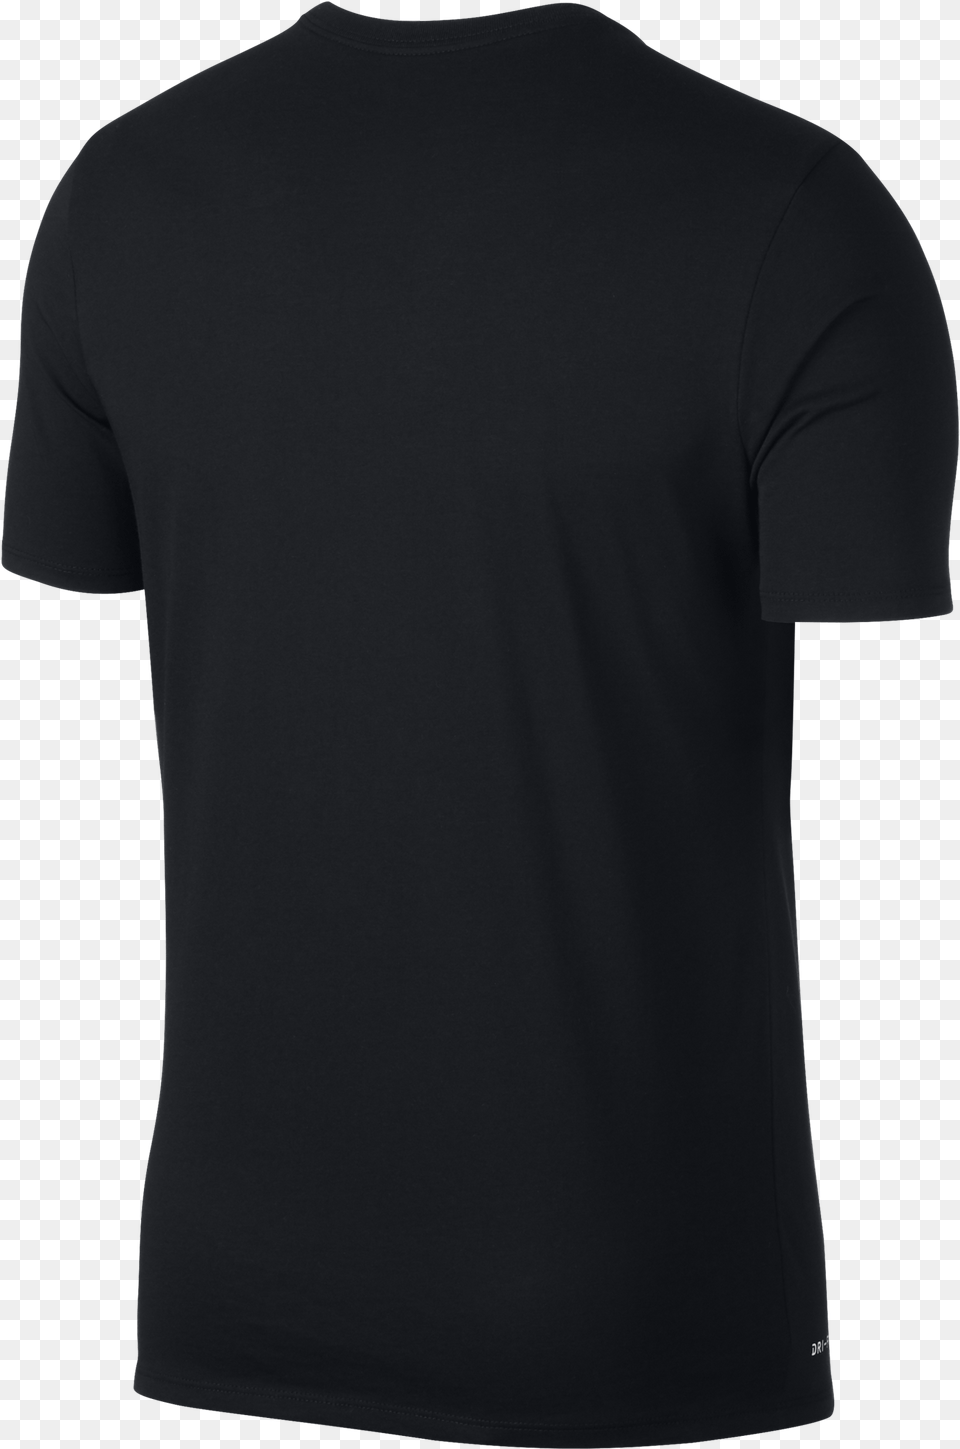 Nike Dry Pg13 Tee Black Shirt Girls, Clothing, T-shirt Png Image